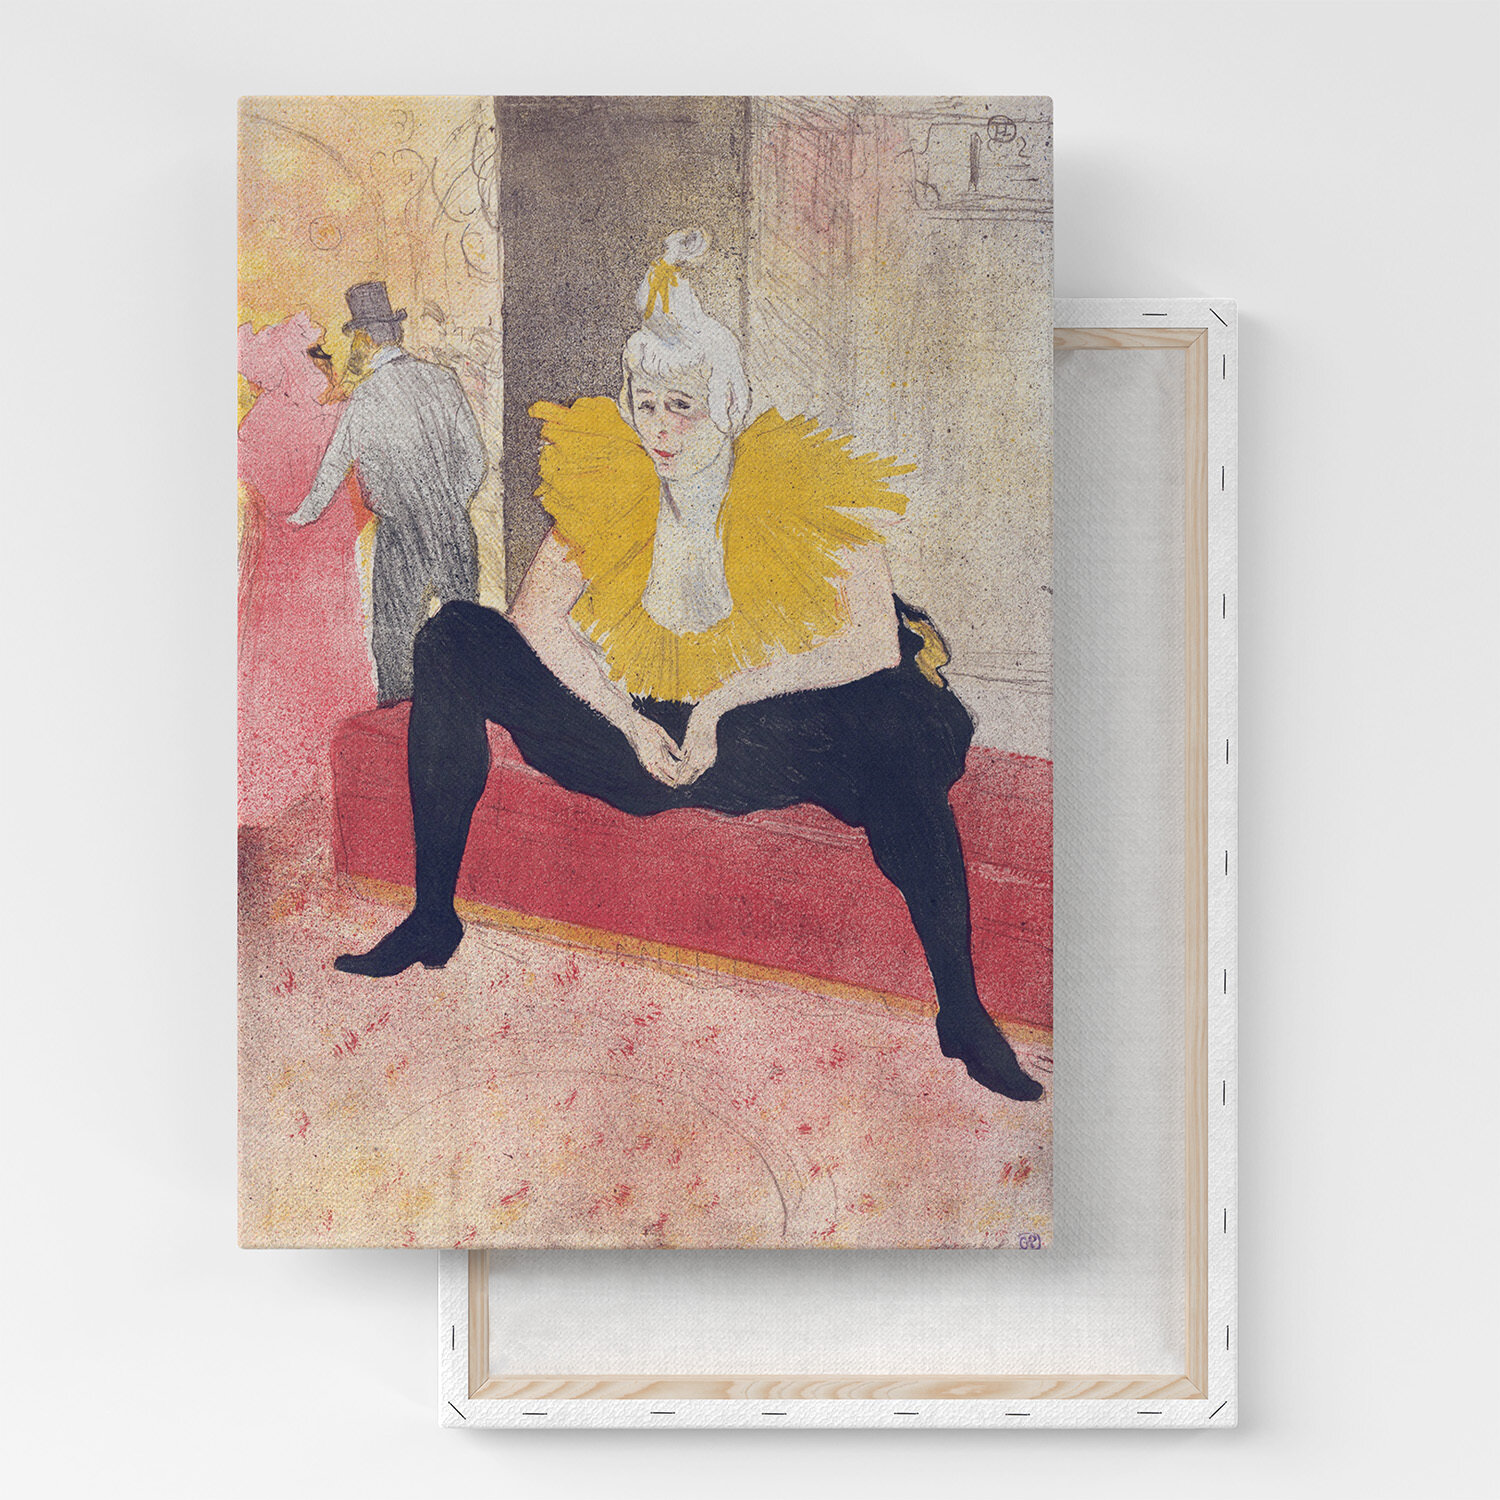 Картина на холсте, репродукция / Henri de Toulouse-Lautrec / Анри де Тулуз-Лотрек / Размер 30 x 40 см